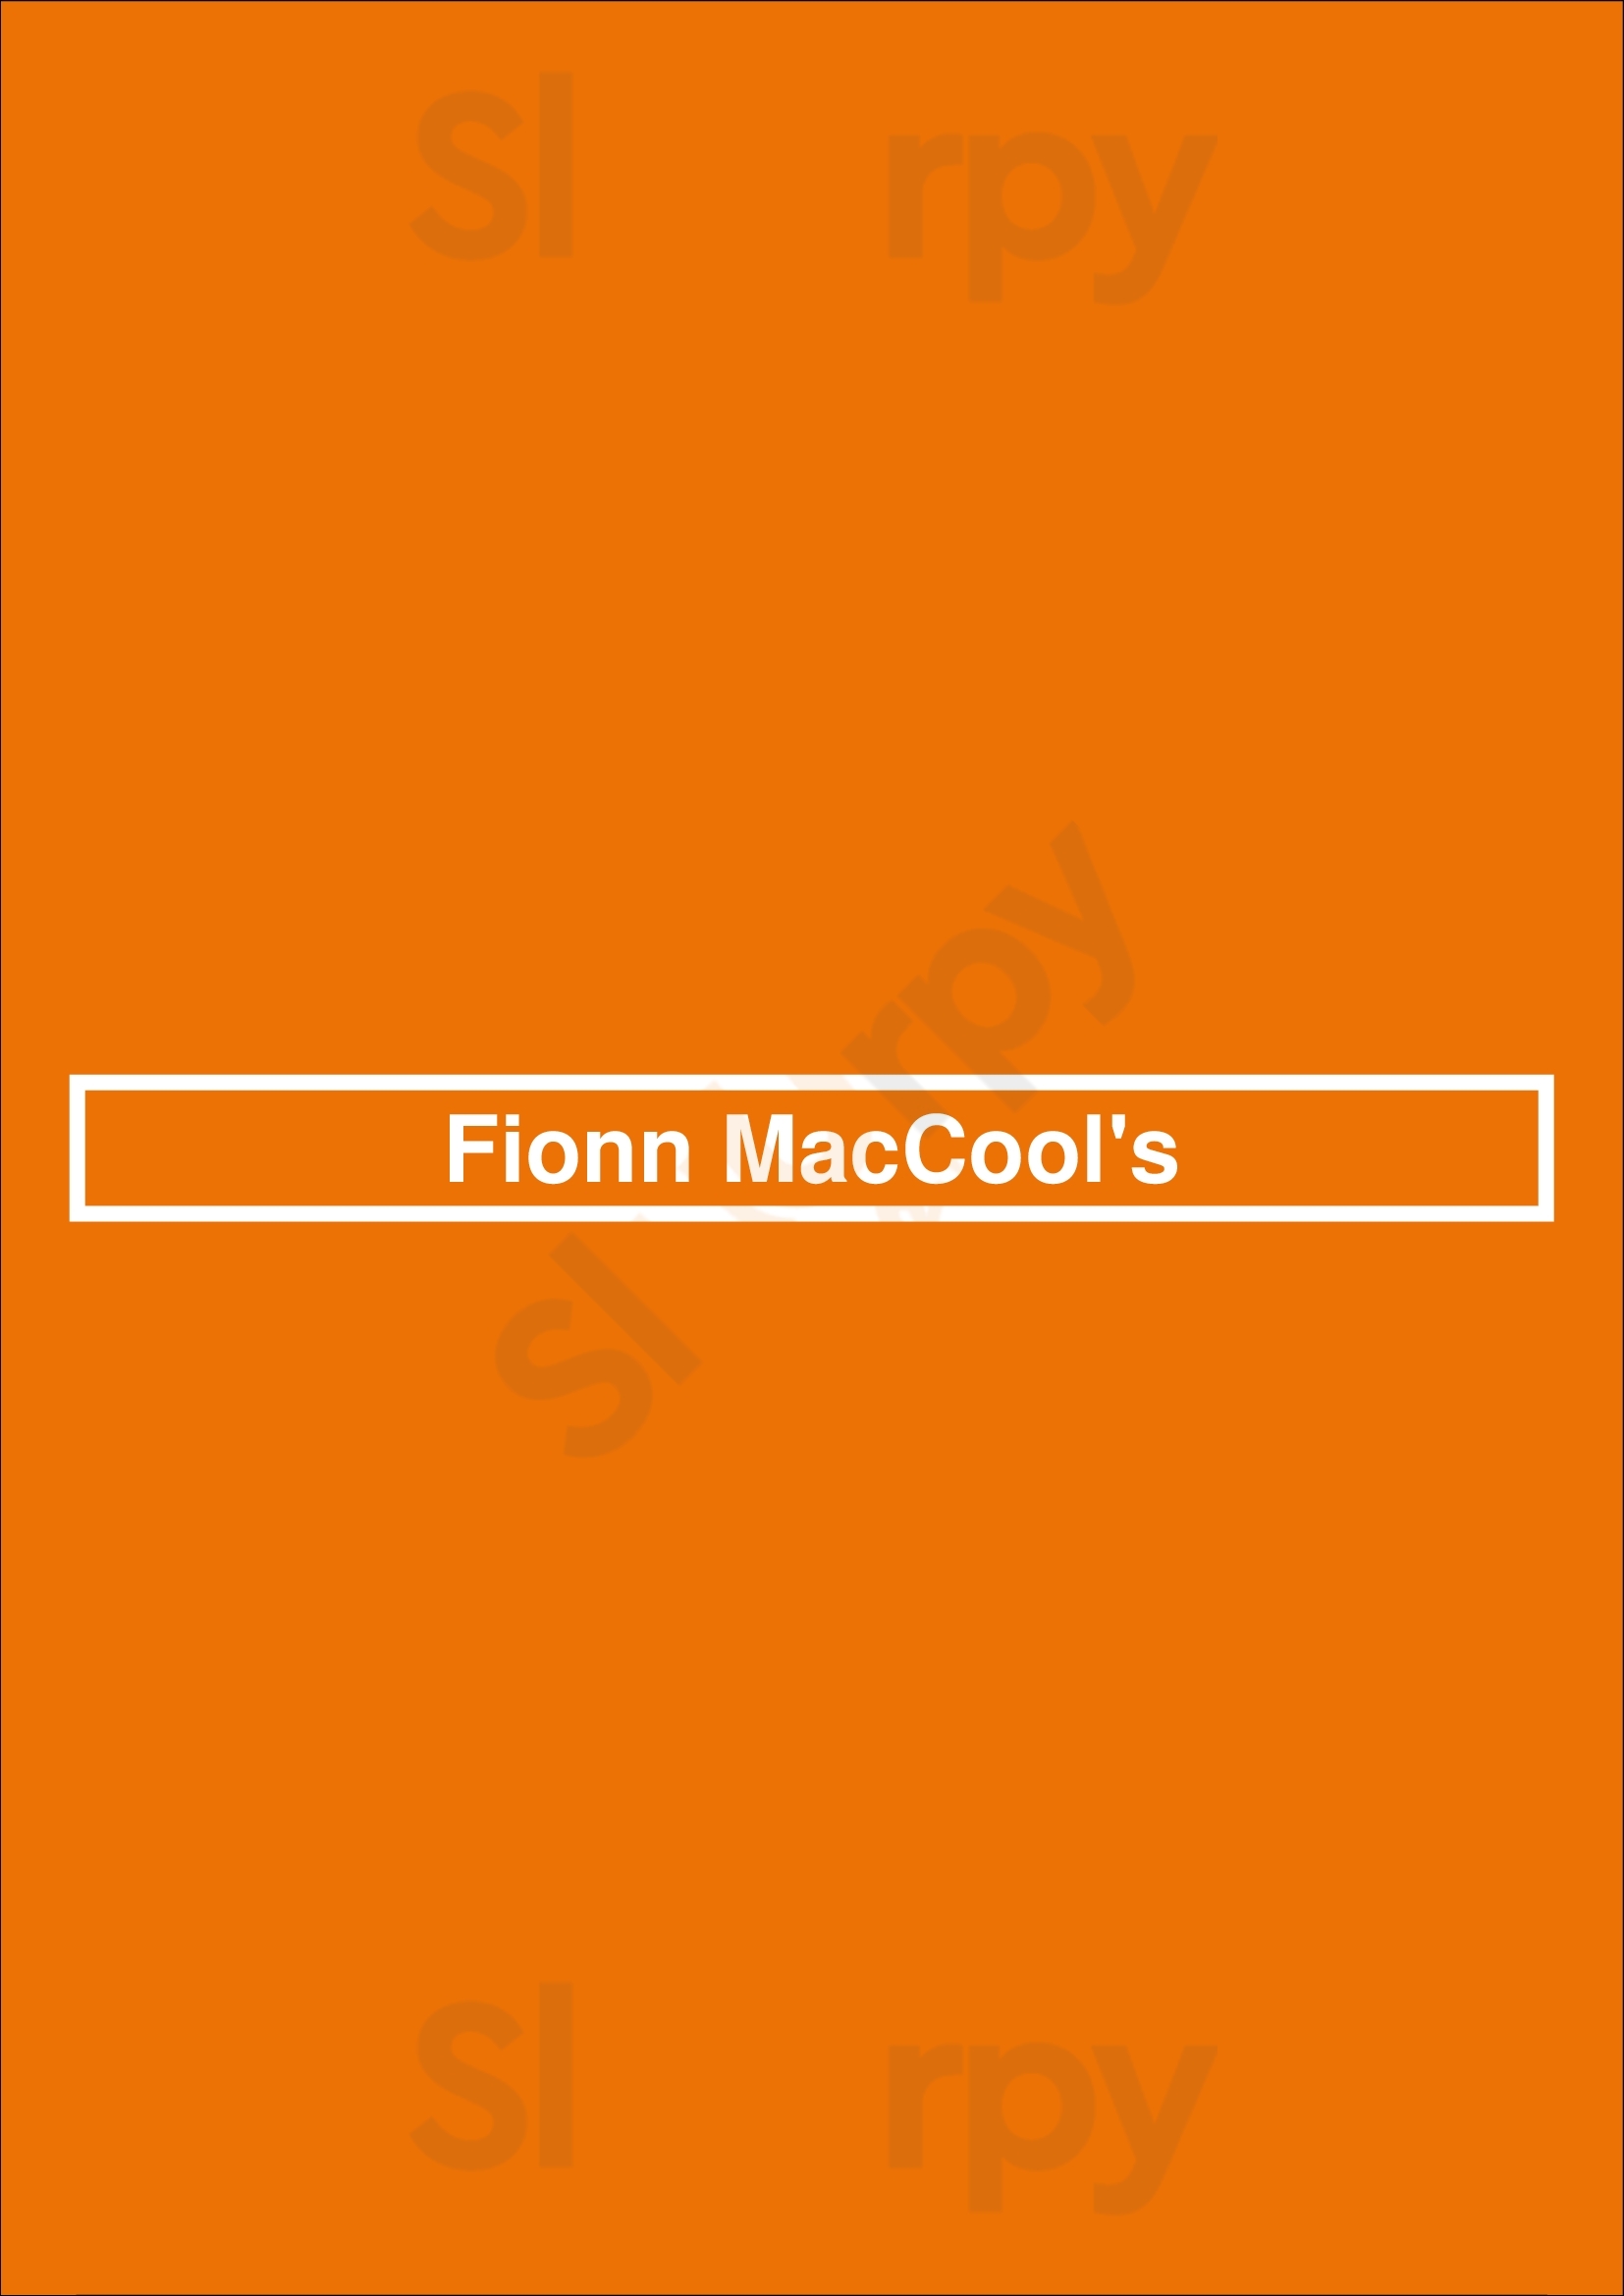 Fionn Maccool's Brampton Menu - 1